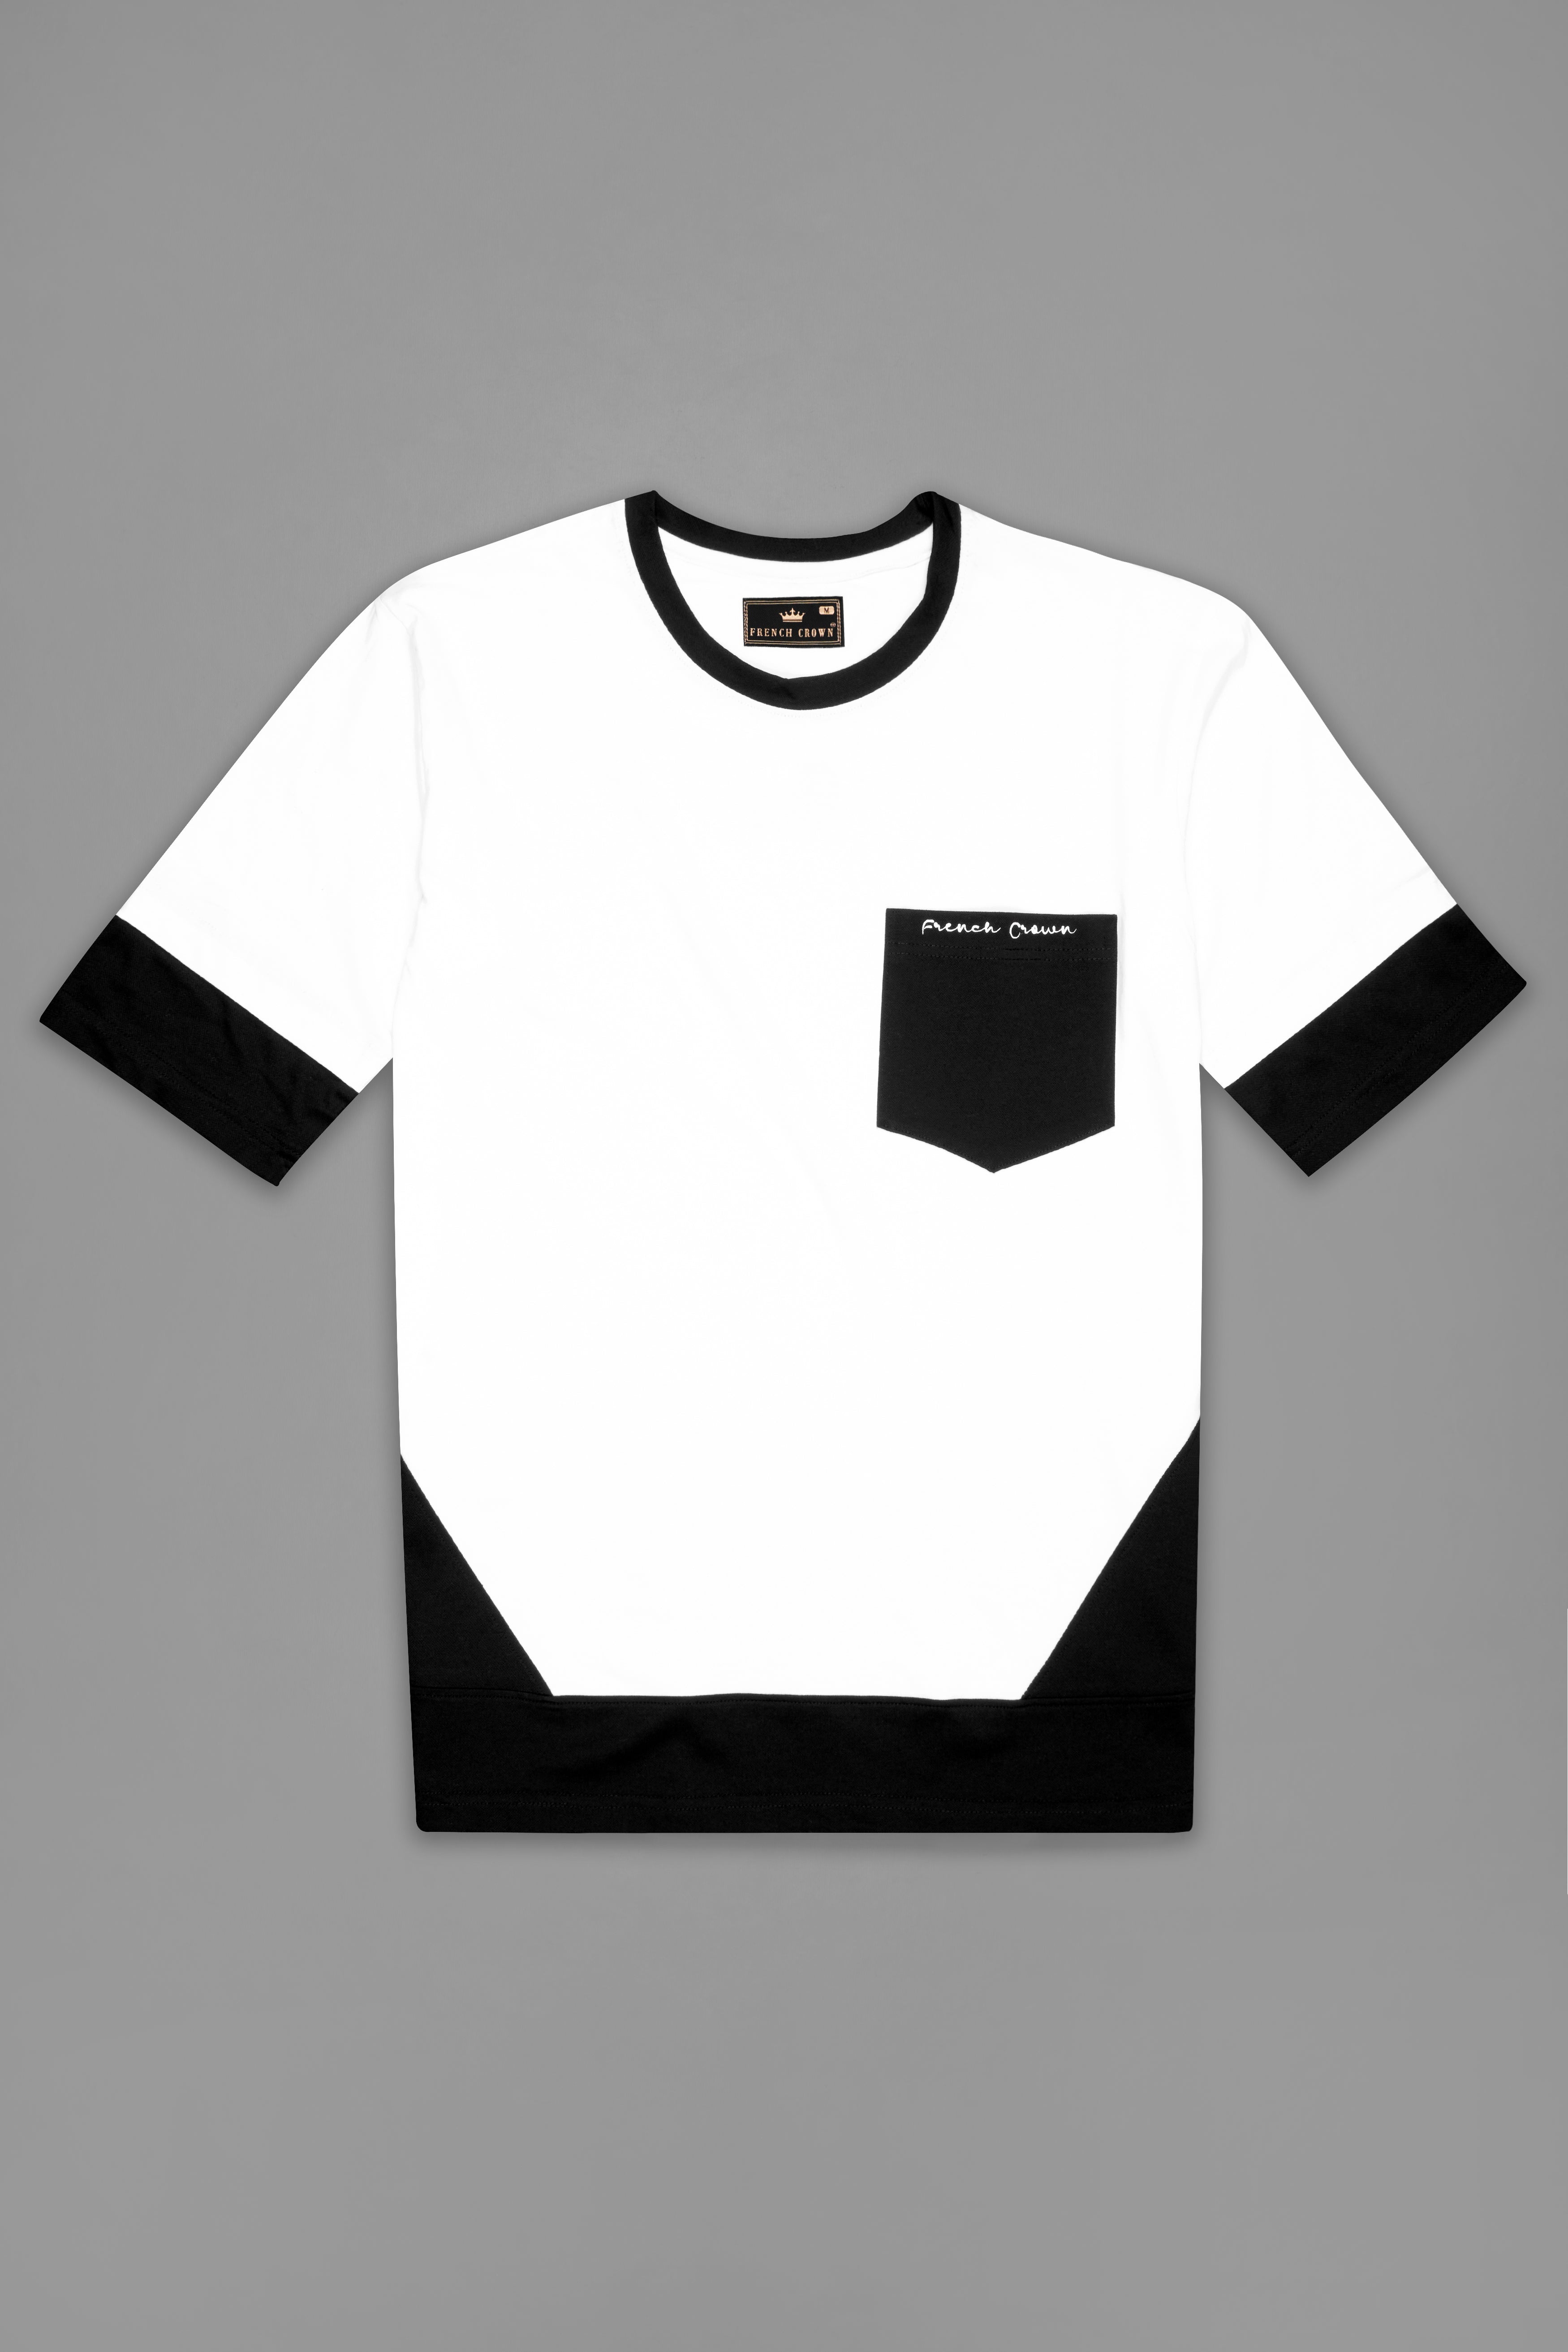 Bright White and Black Premium Cotton T-Shirt TS910-S, TS910-M, TS910-L, TS910-XL, TS910-XXL